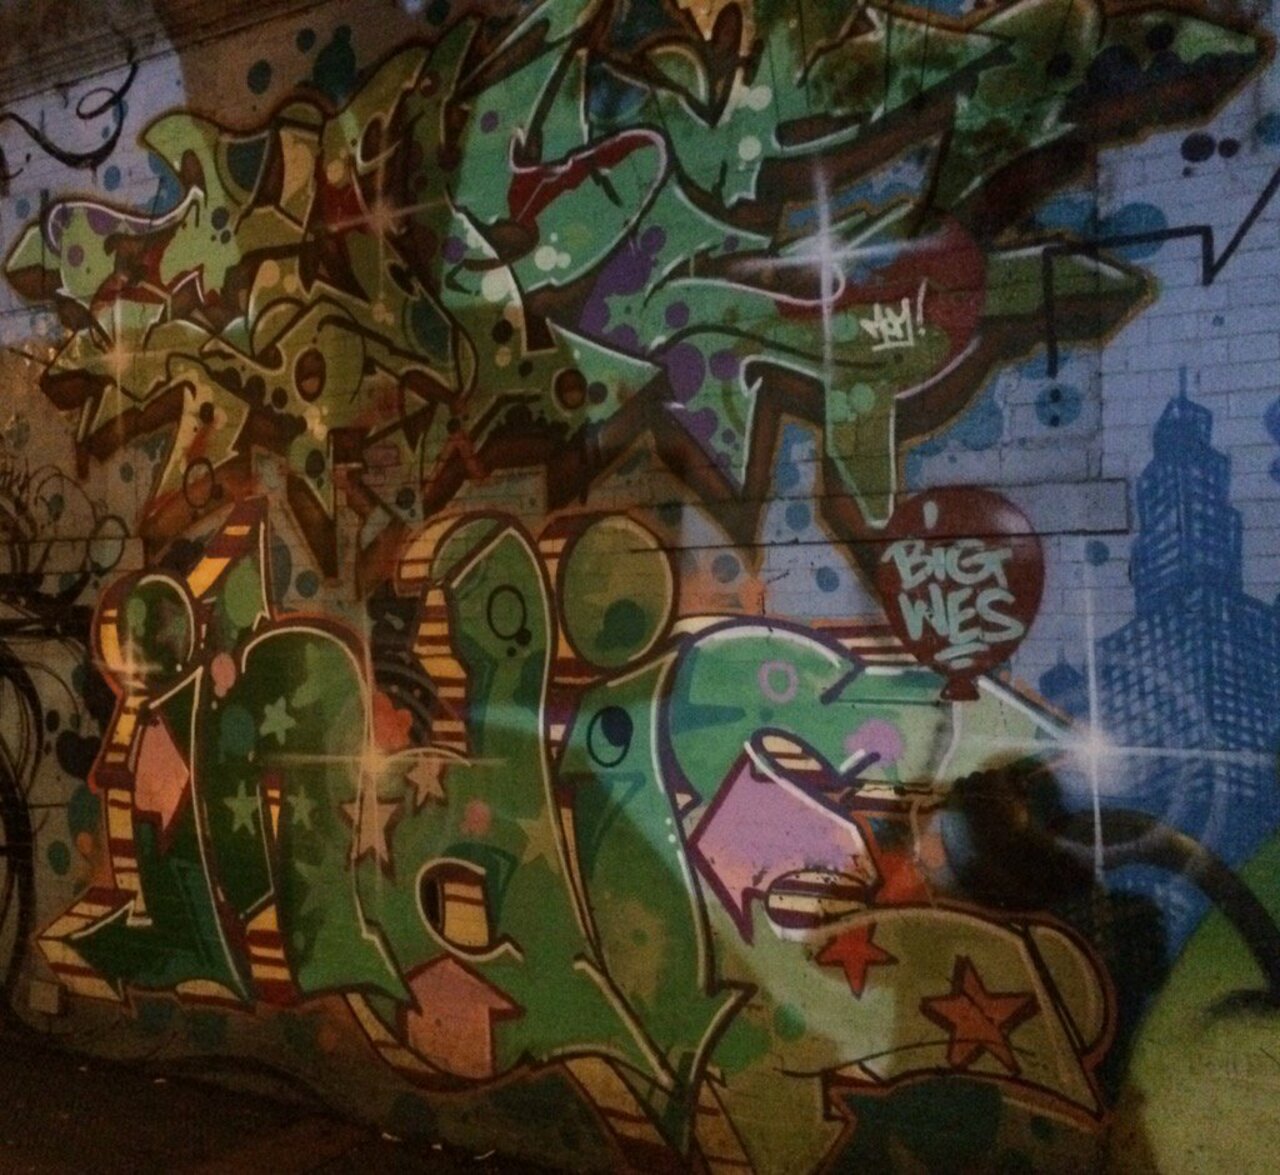 RT @Streetart_Photo: Little late night @MRCOPE2 @Indie184 mural in the Bronx #graffiti #art #streetart #bronx #nyc #cope2 #indie184 https://t.co/BDAmzZt3EX